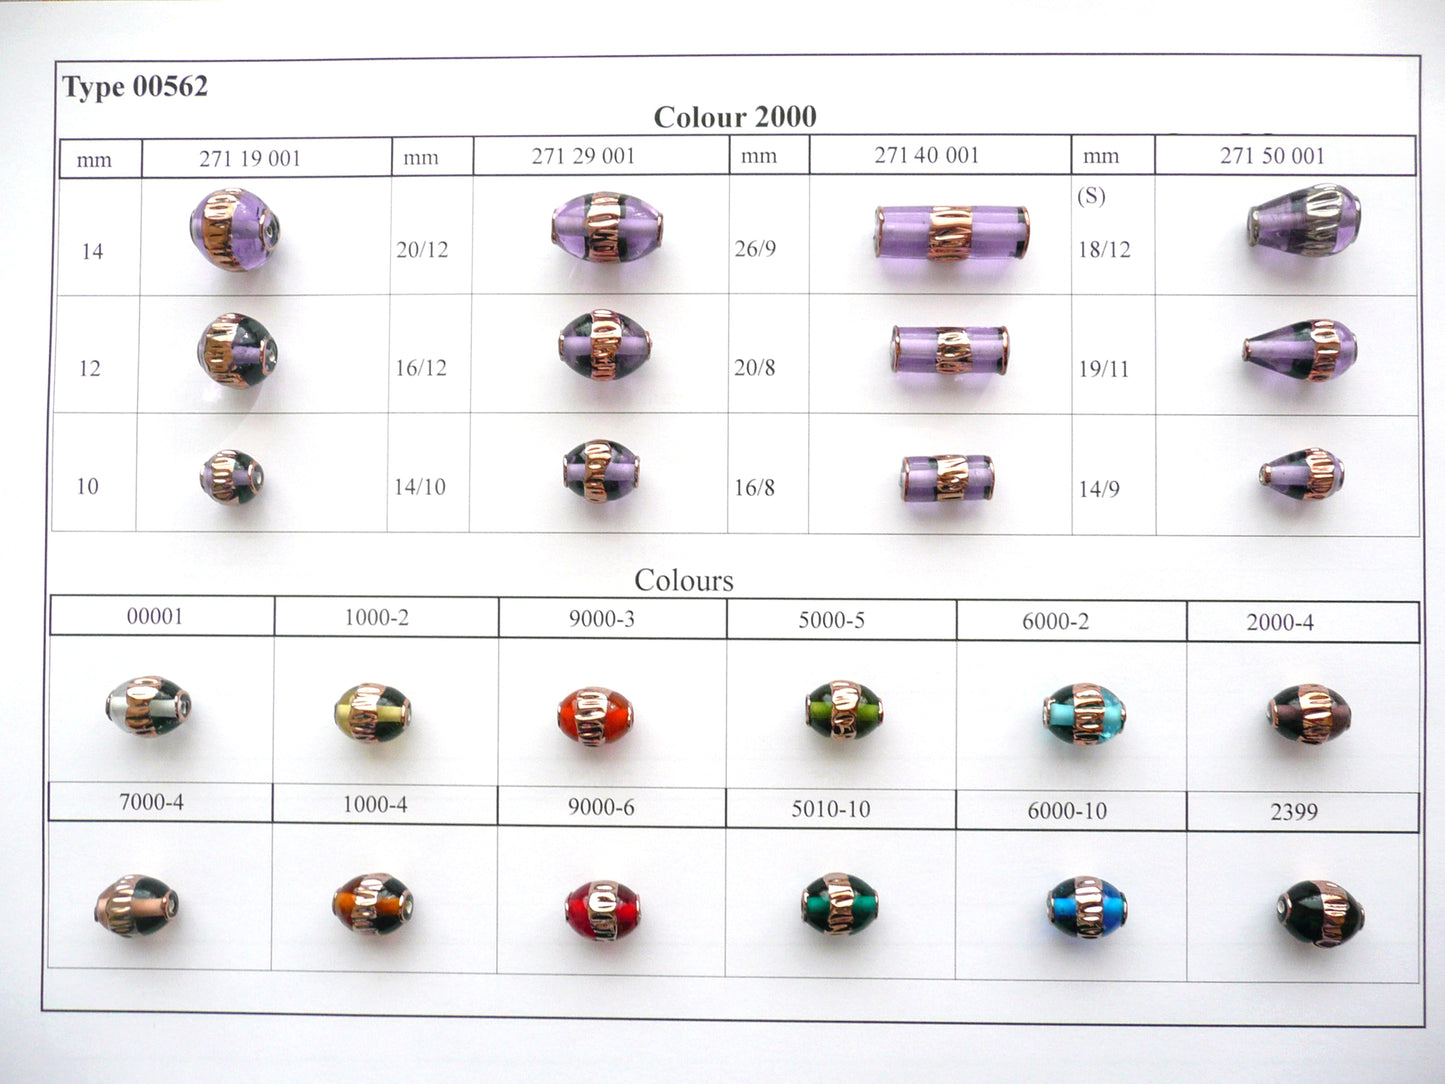 30 pcs Lampwork Beads 562 / Teardrop/Pear (271-50-001), Handmade, Preciosa Glass, Czech Republic